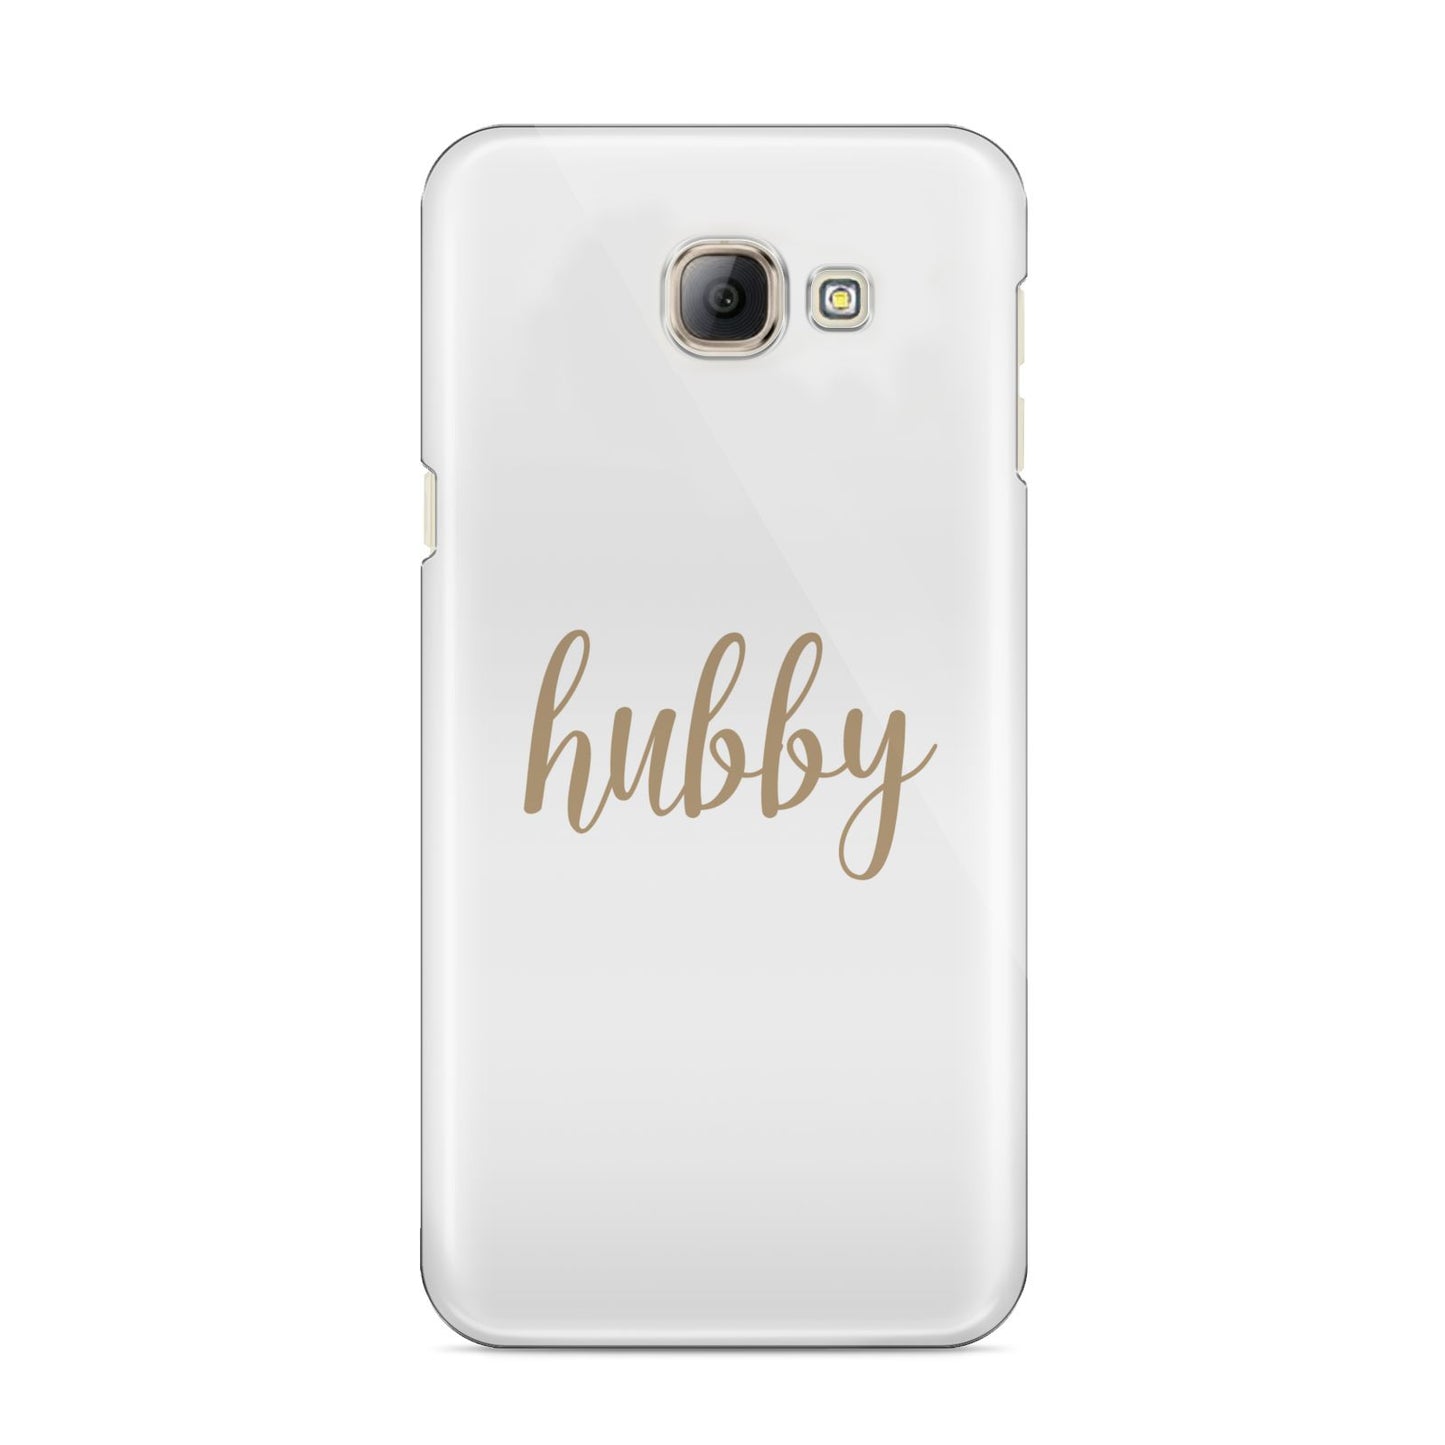 Hubby Samsung Galaxy A8 2016 Case